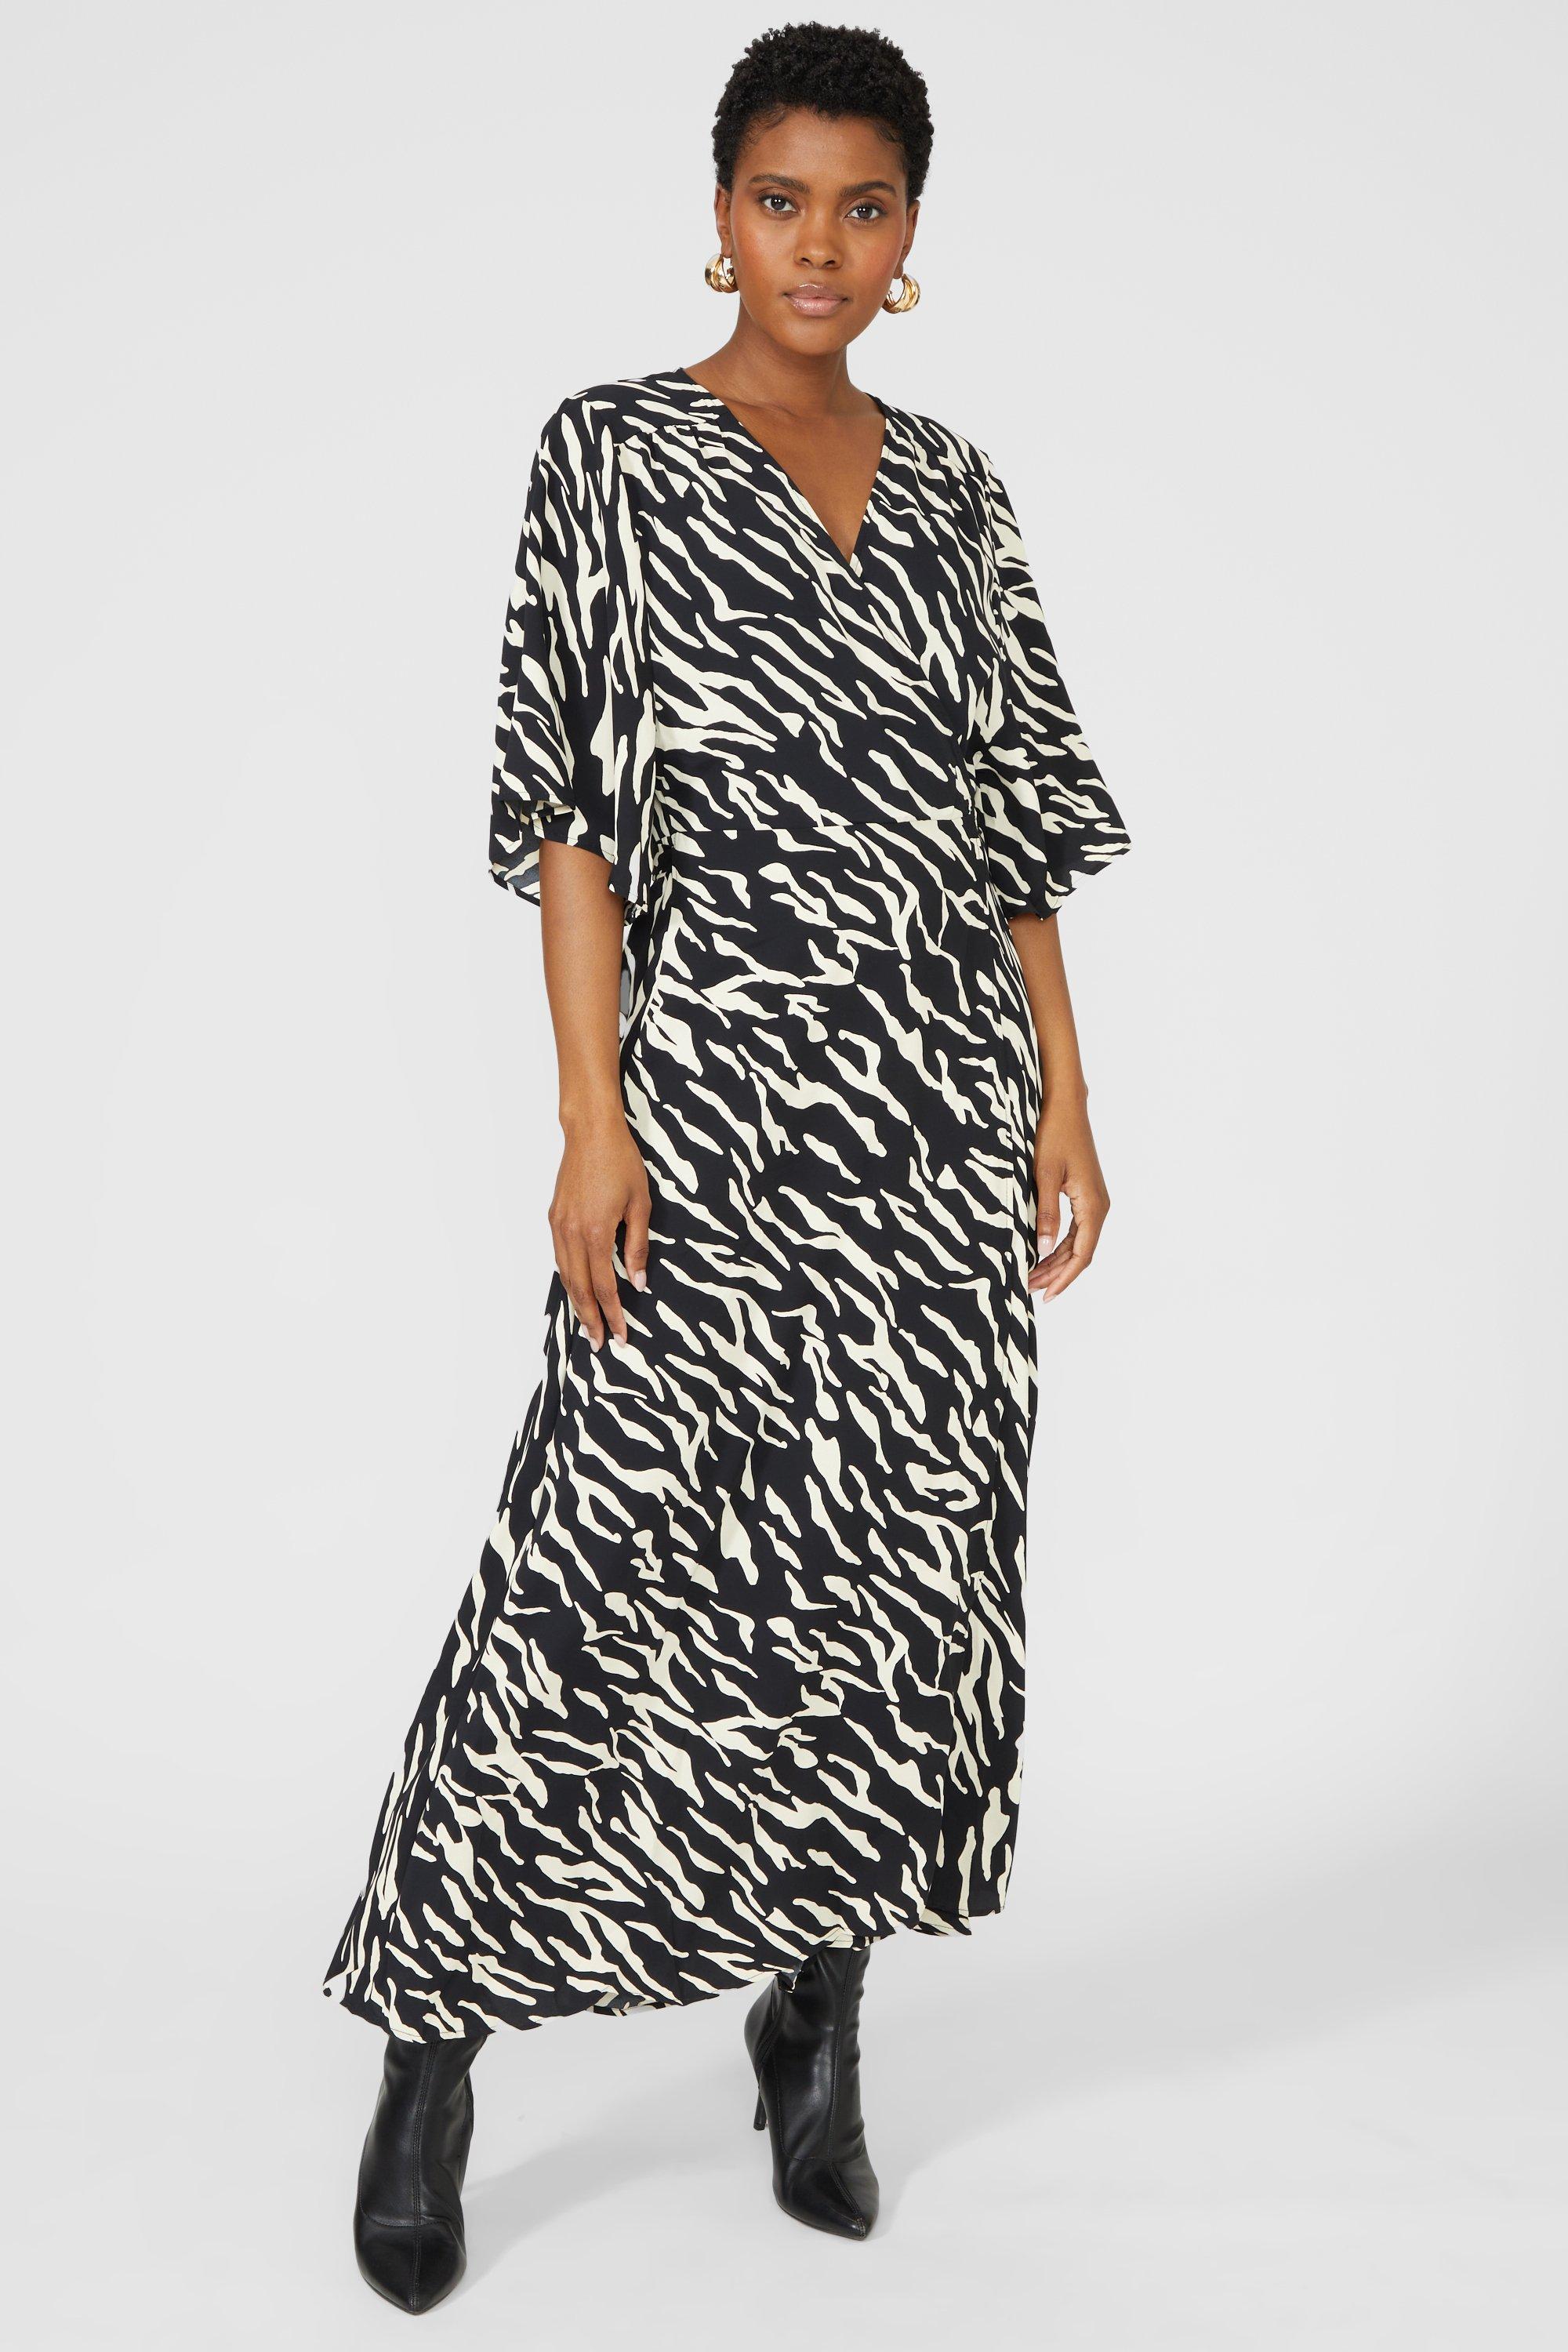 Zebra Printed Wrap Midi Dress